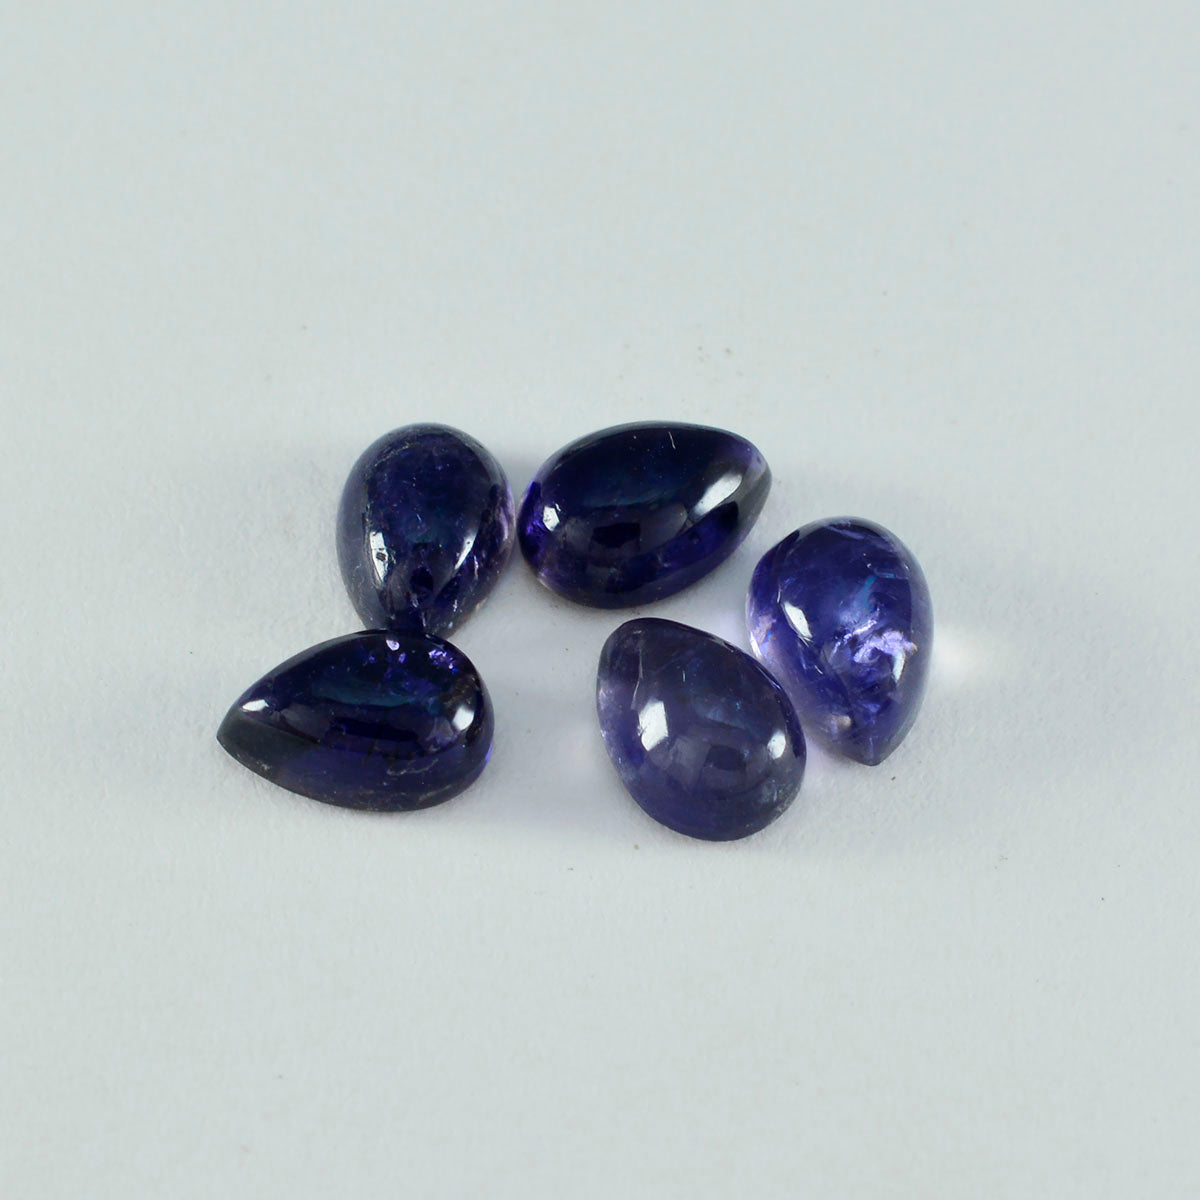 Riyogems 1PC Blue Iolite Cabochon 7x10 mm Pear Shape superb Quality Loose Gem